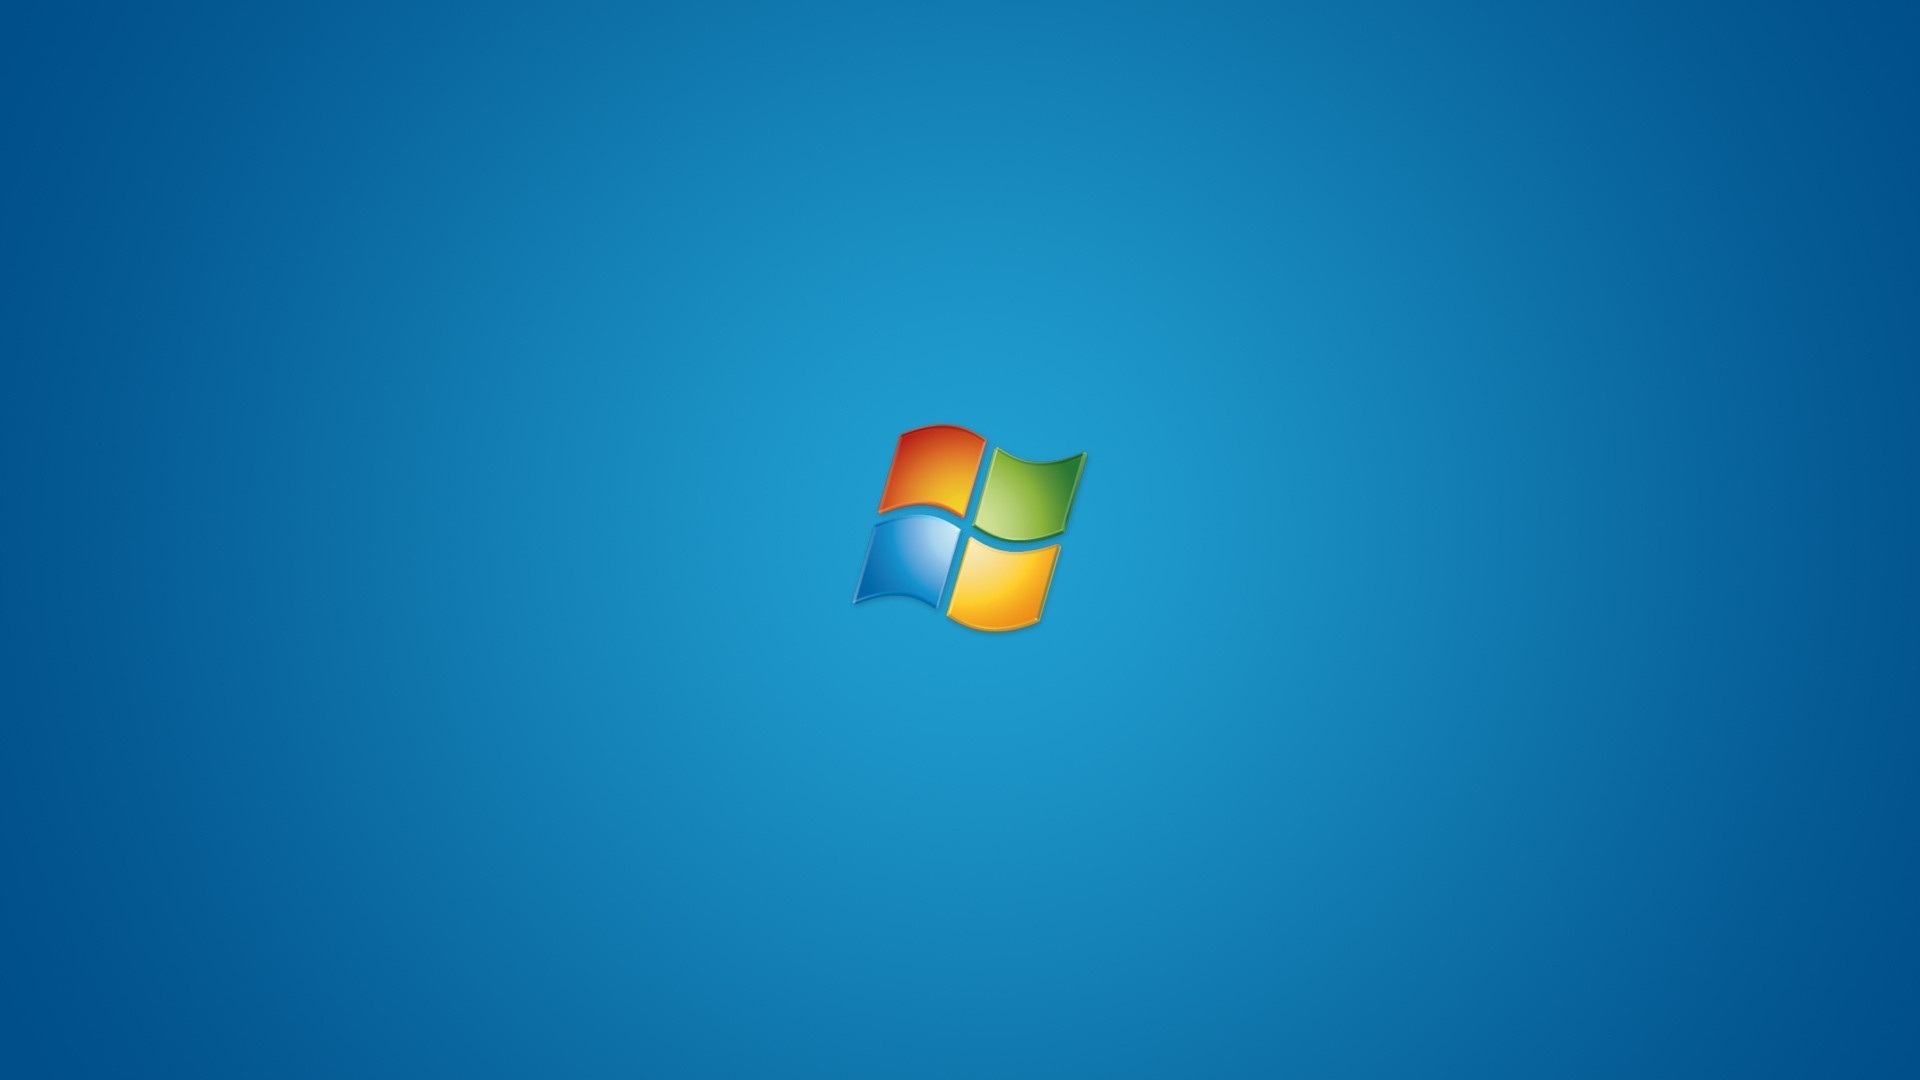 Windows xp error microsoft windows blue screen of death wallpaper